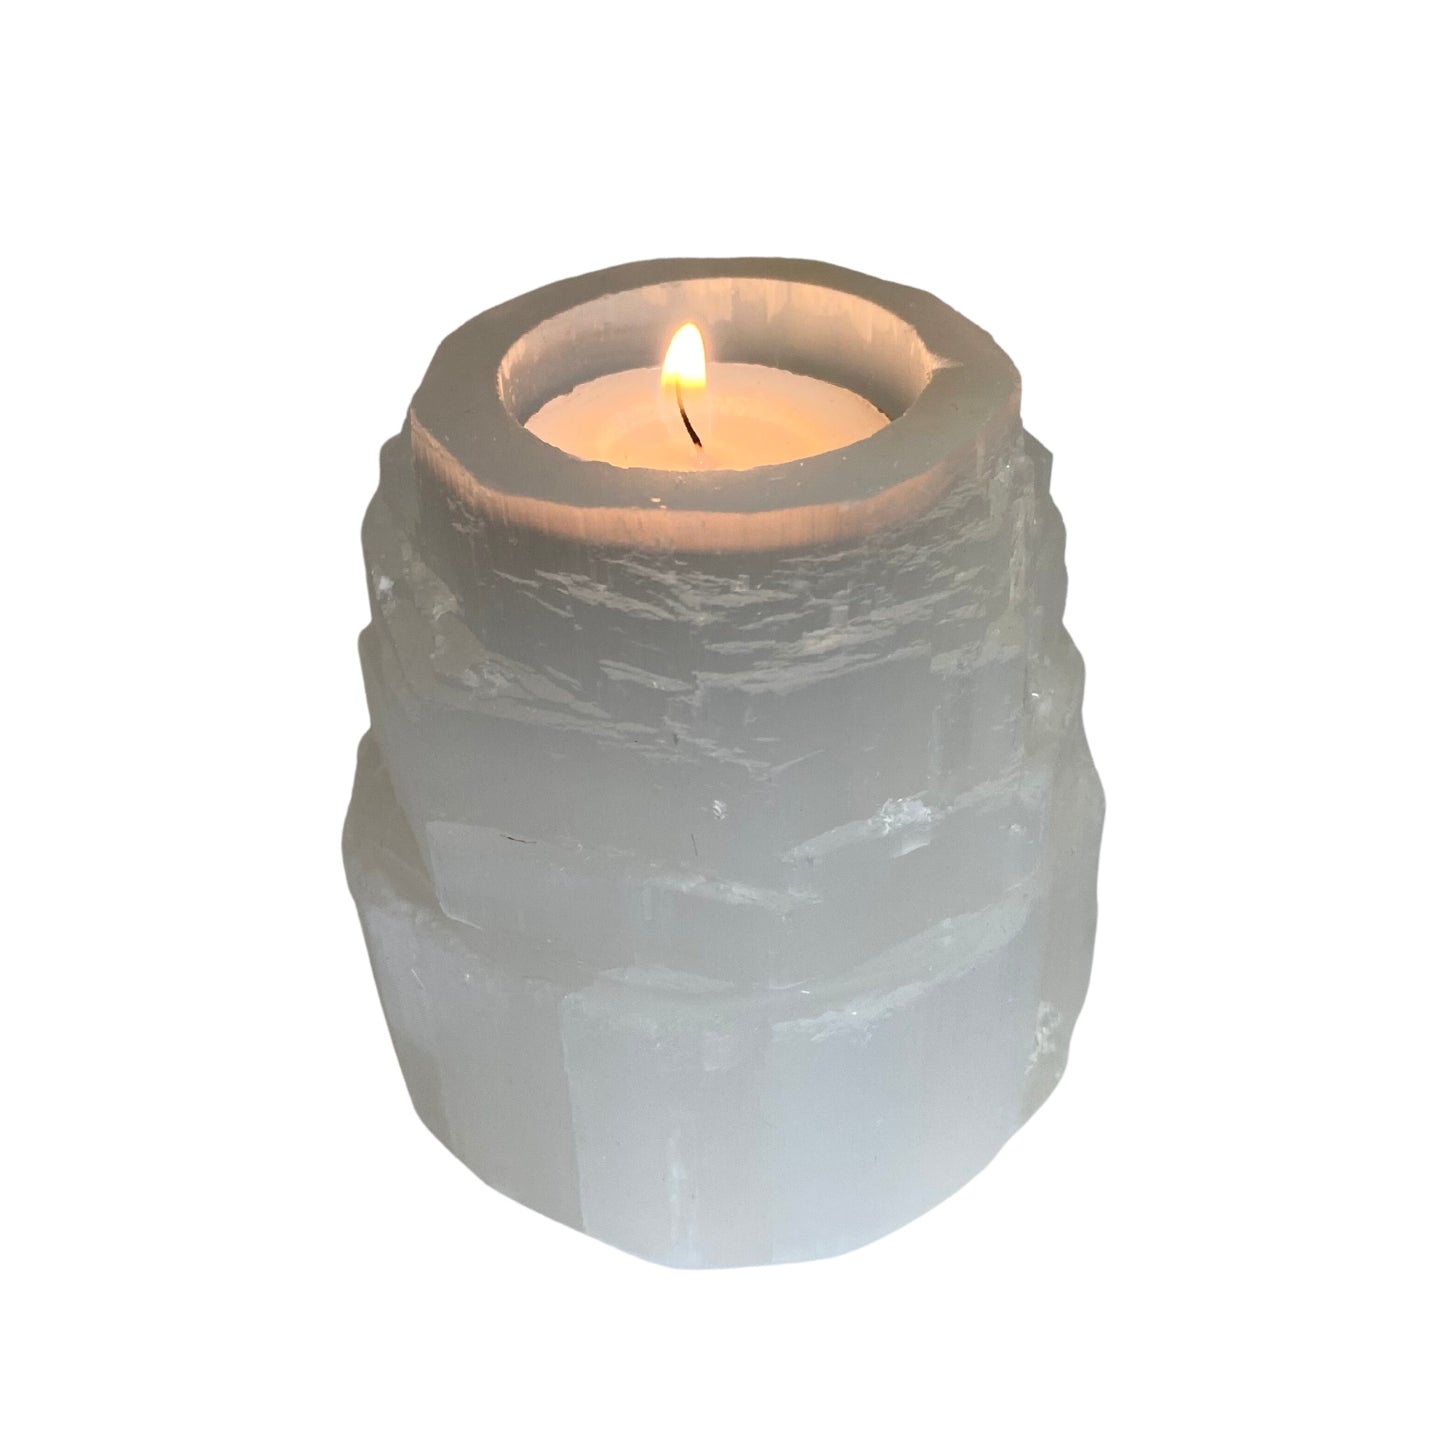 Selenite crystal candle holder